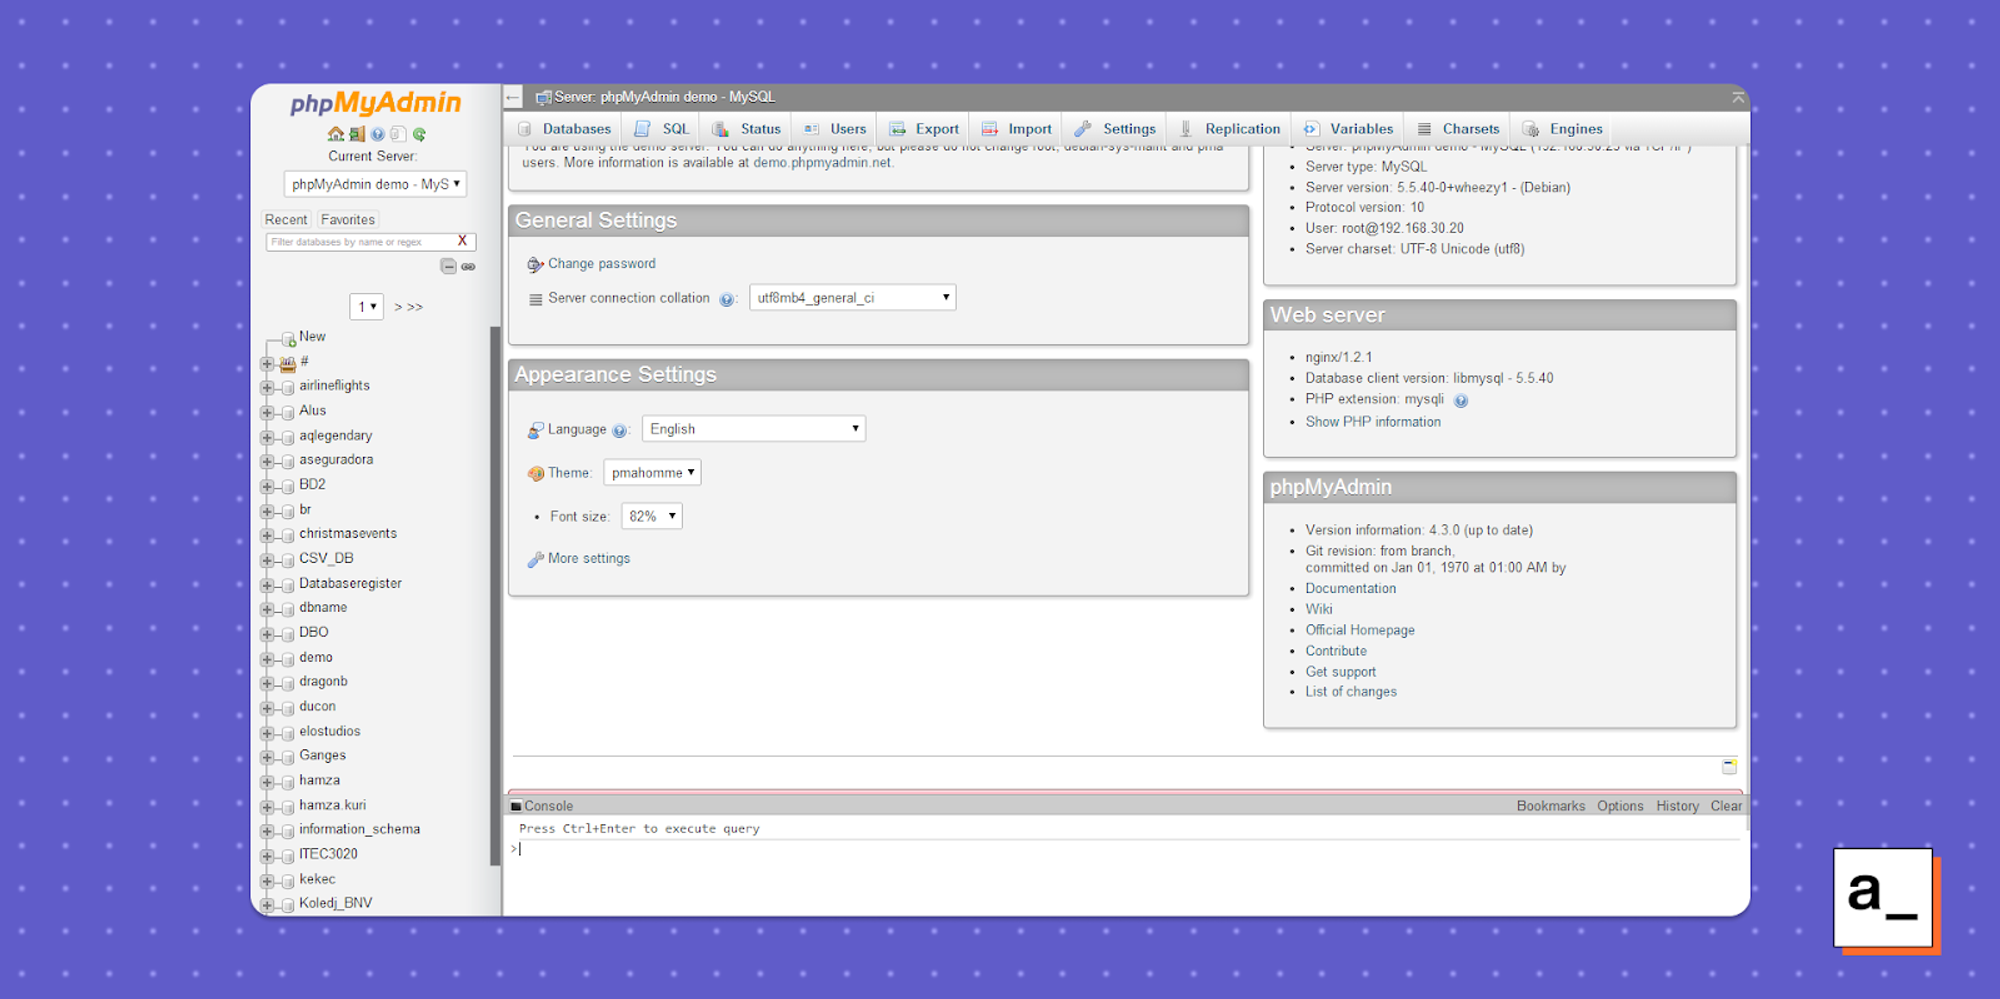 A screenshot of the phpMyAdmin interface